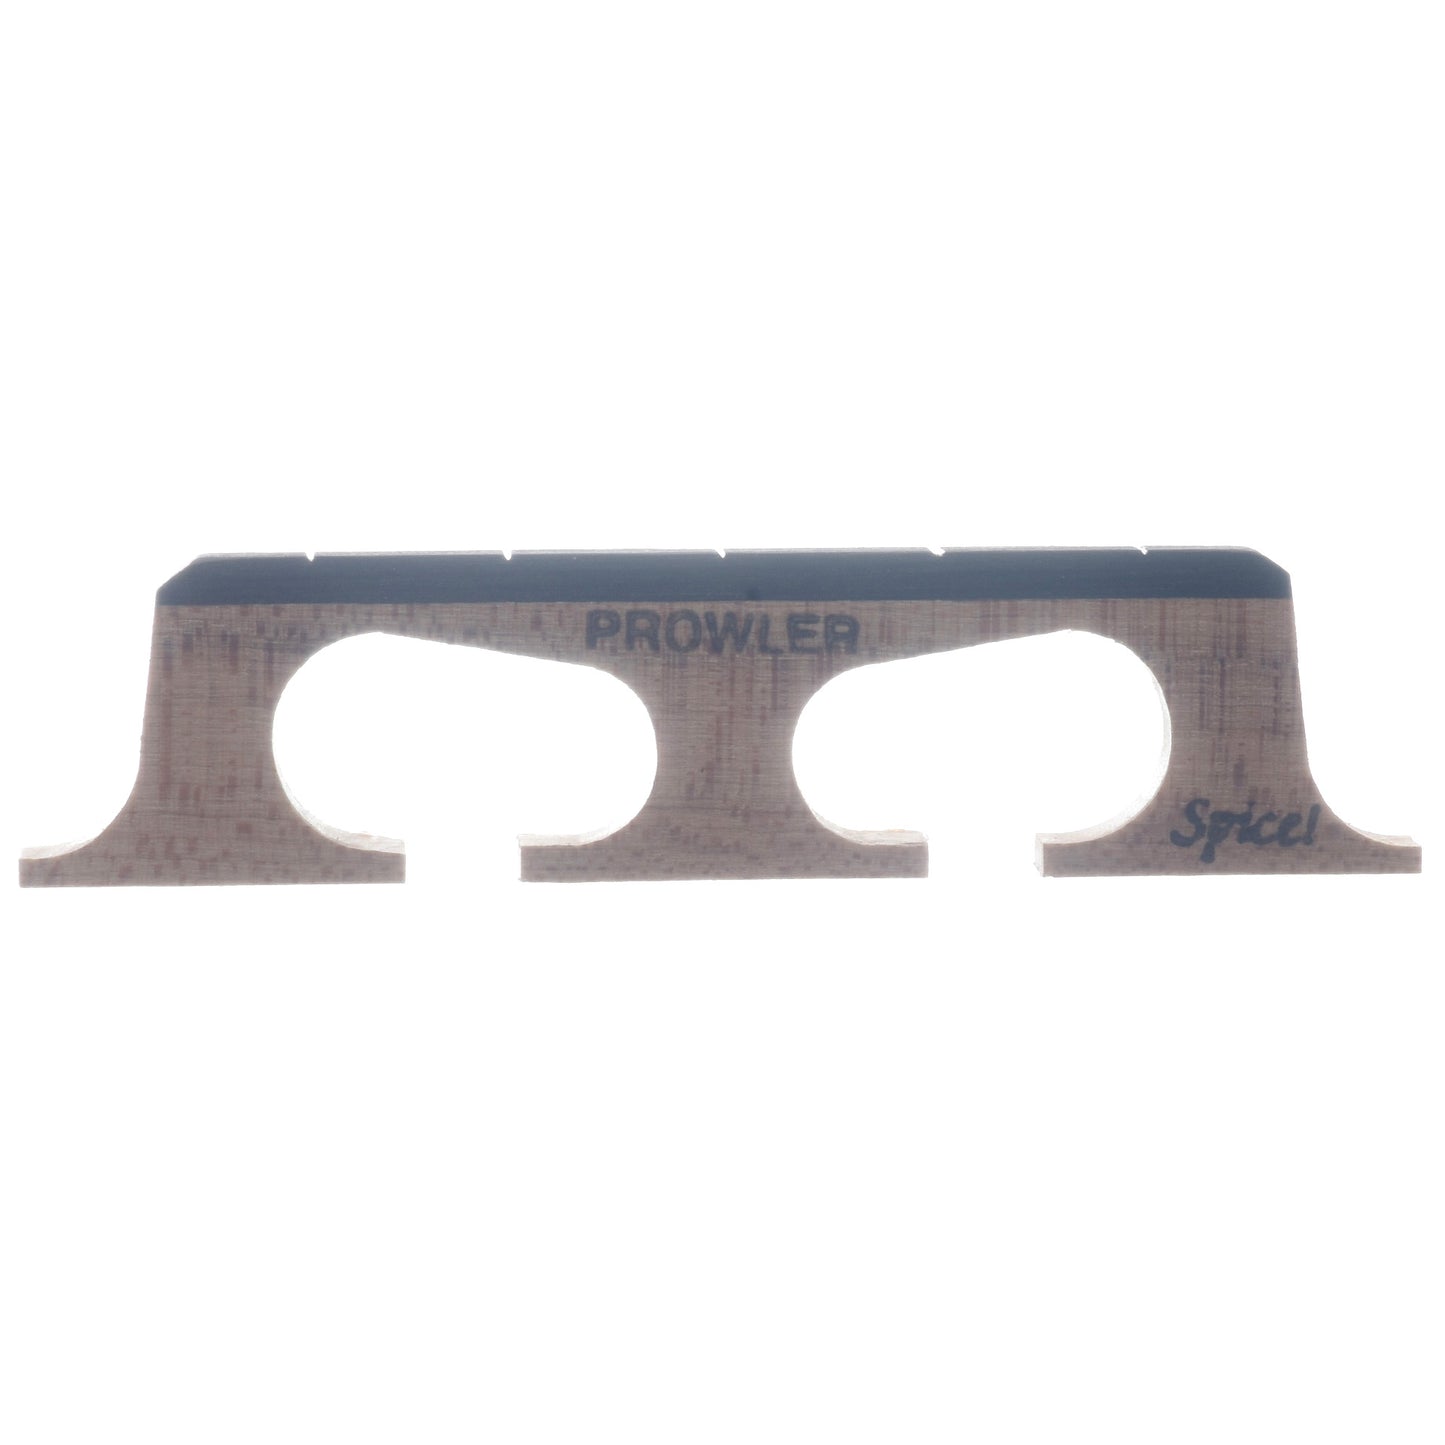 Image 2 of Kat Eyz Prowler Spice Banjo Bridge, 11/16" High, Crowe Spacing - SKU# KEPB-11/16-C : Product Type Accessories & Parts : Elderly Instruments